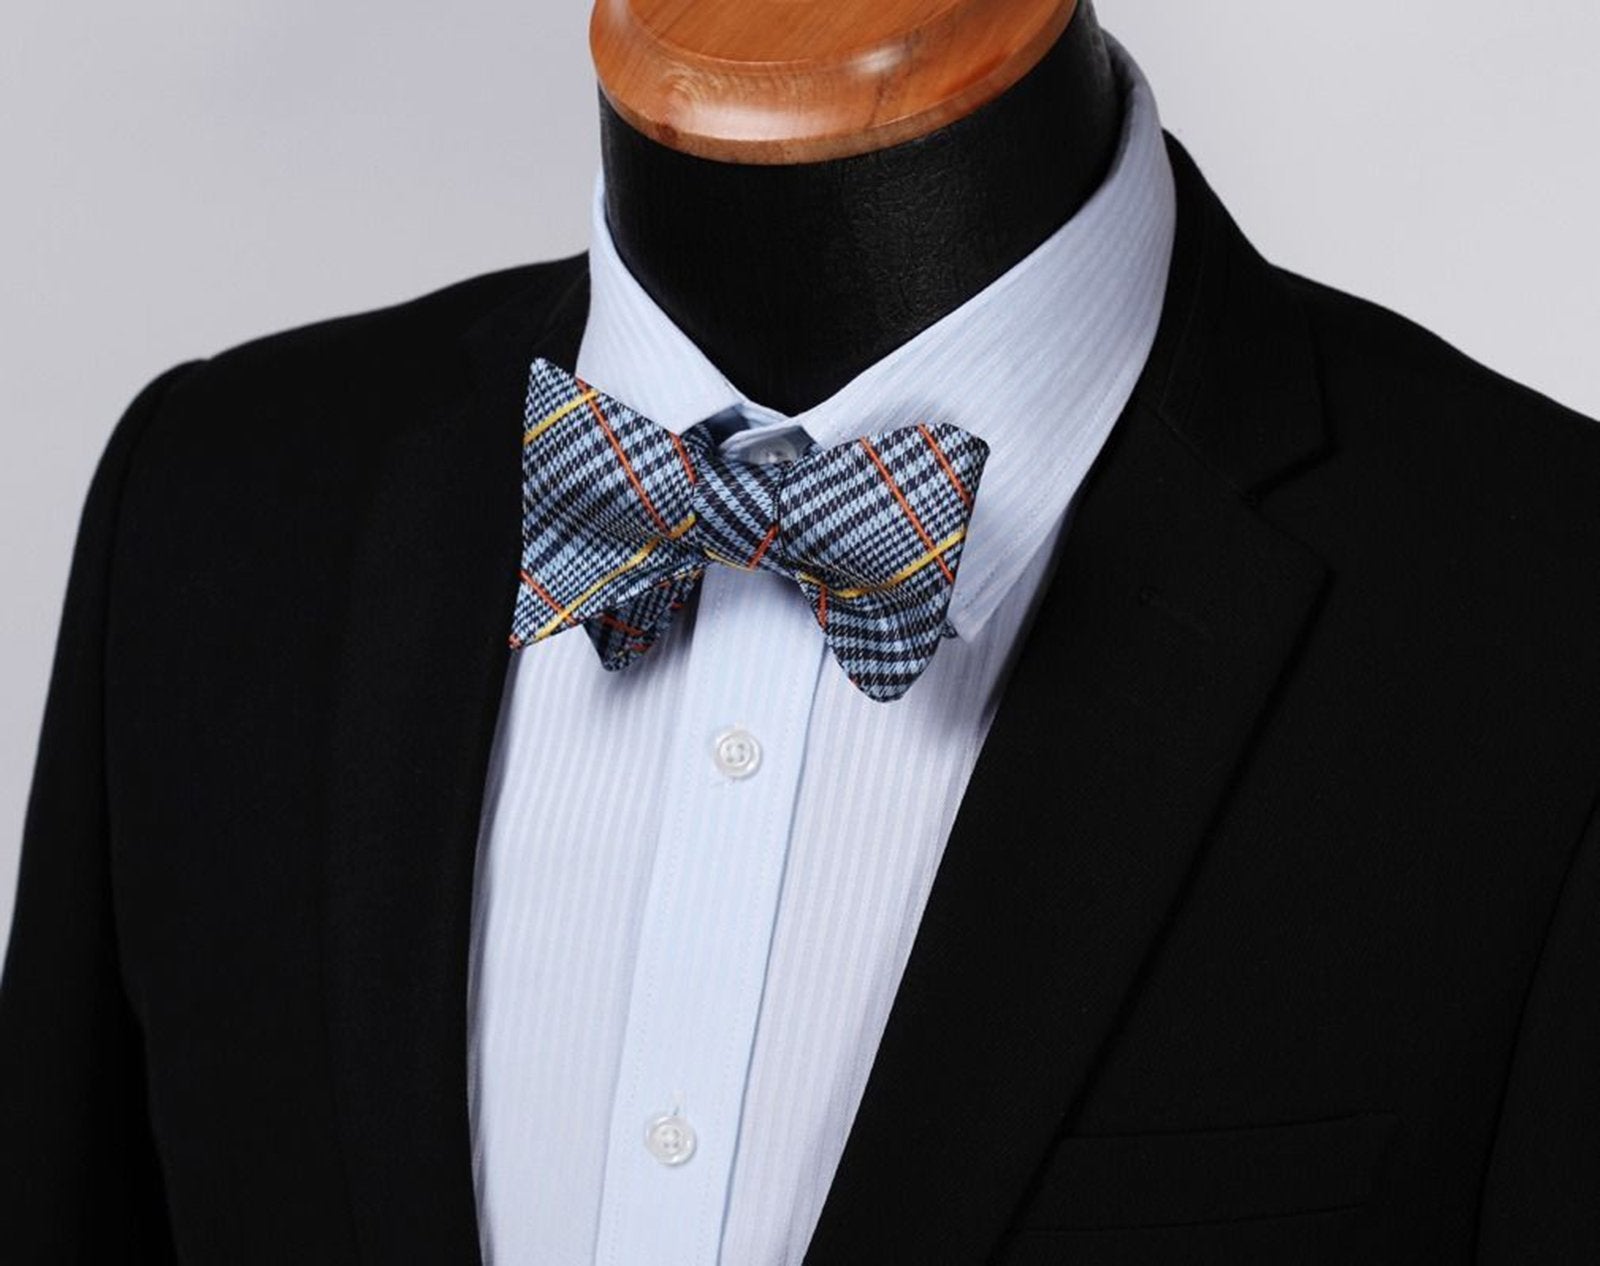 Blue Orange Mens Silk Self tie Bow Tie with Pocket Squares Set - Amedeo Exclusive